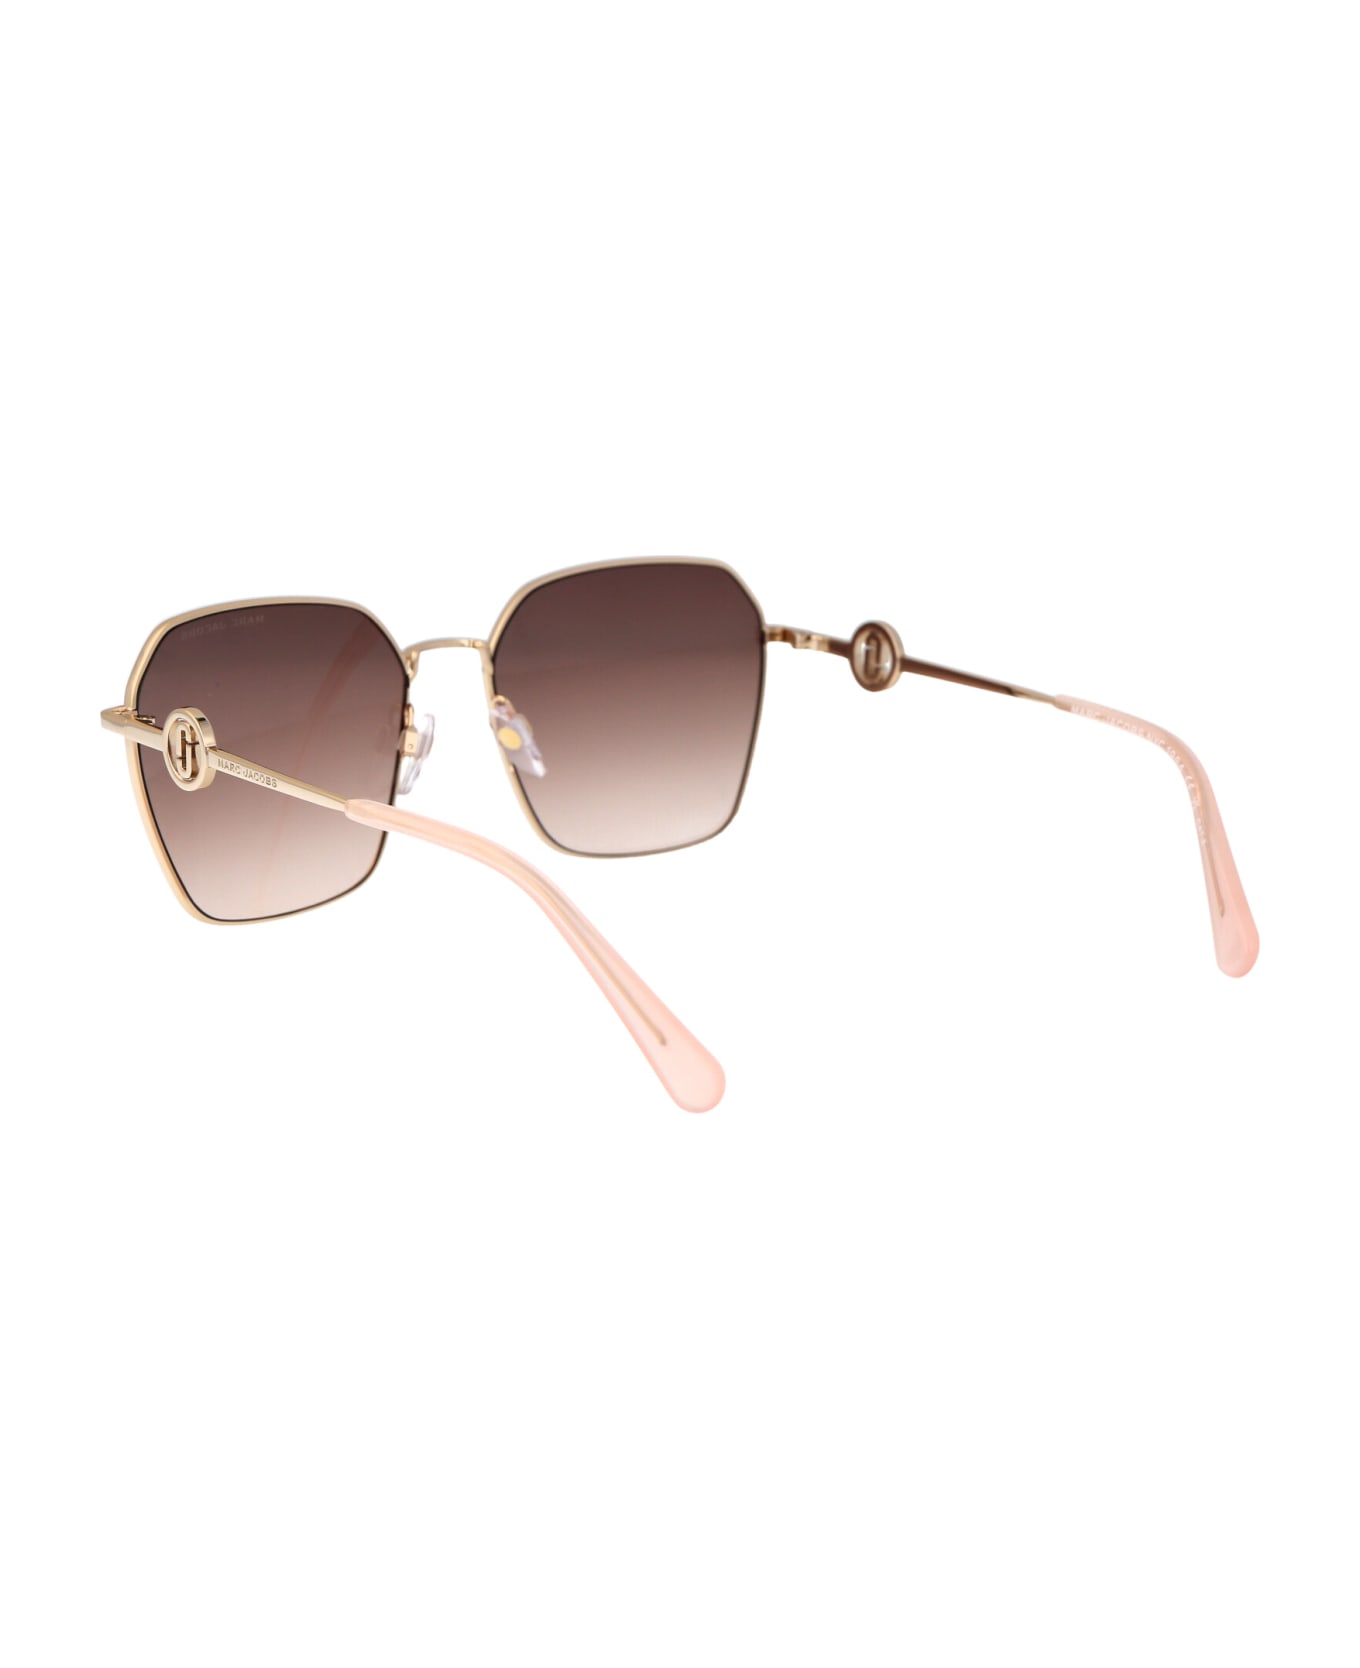 Marc Jacobs Eyewear Marc 729/s Sunglasses - EYRHA GOLD PINK サングラス